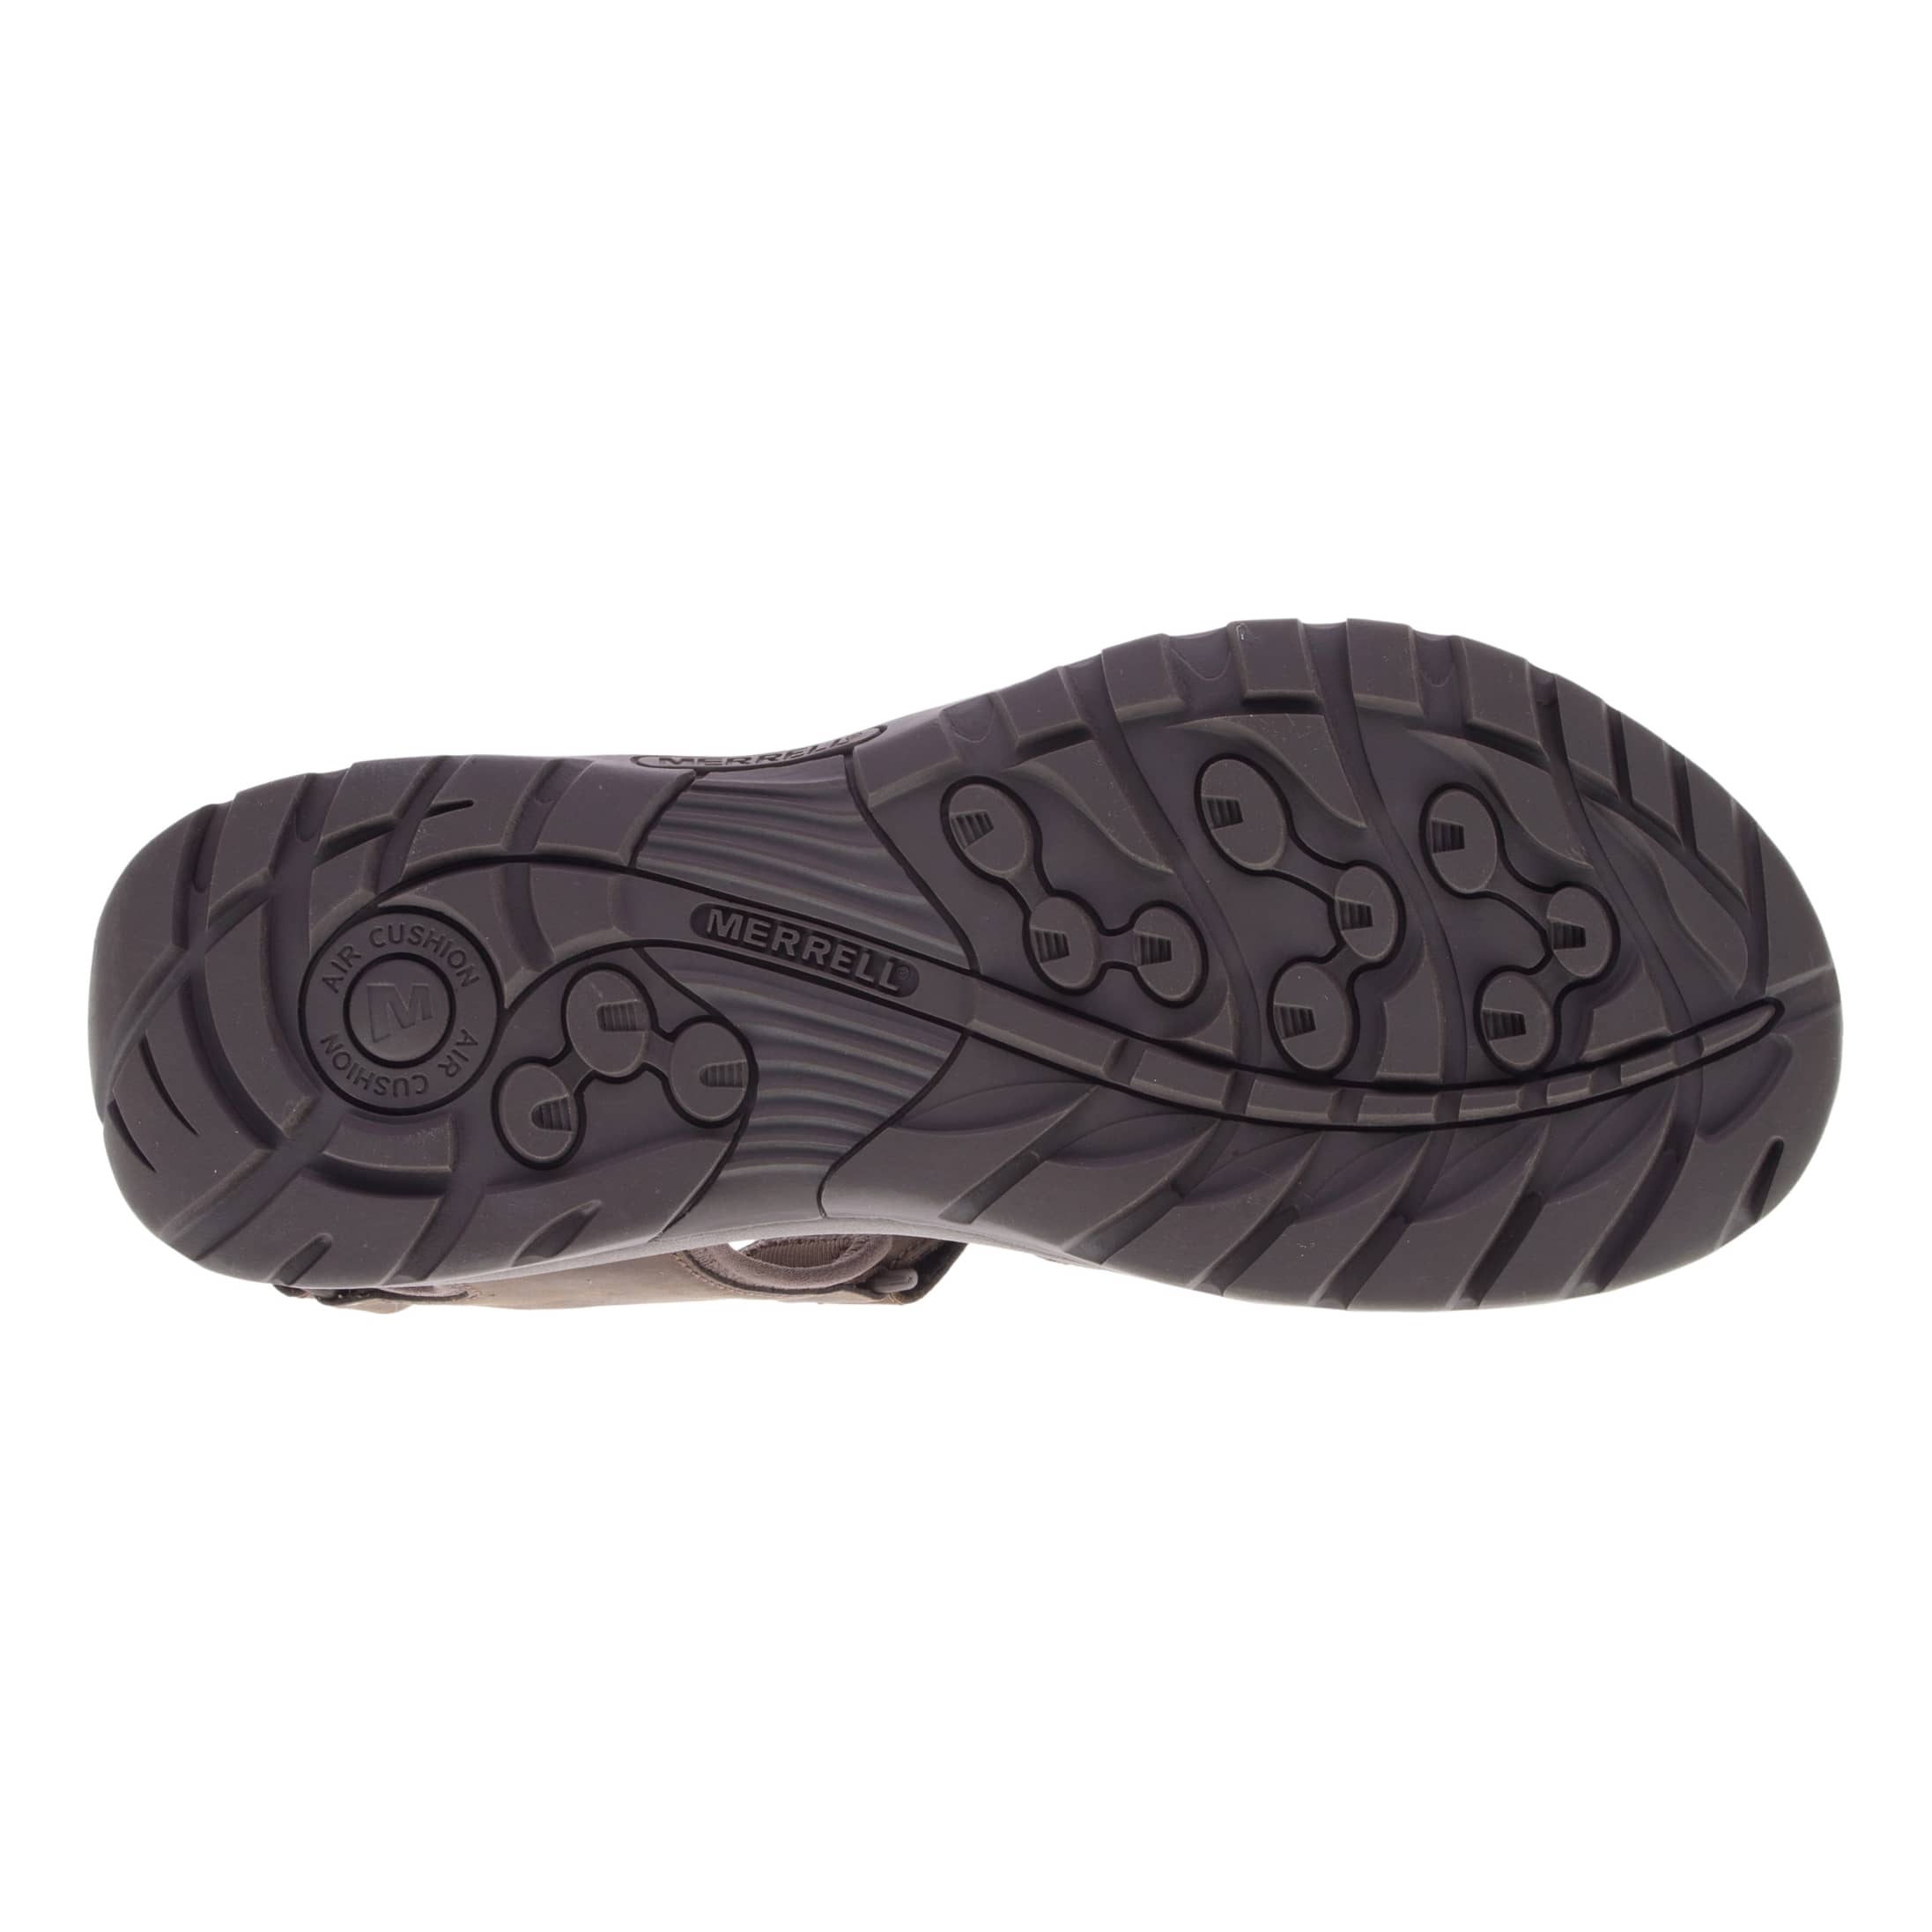 Merrell® Men’s Sandspur 2 Convertible Sandal - sole